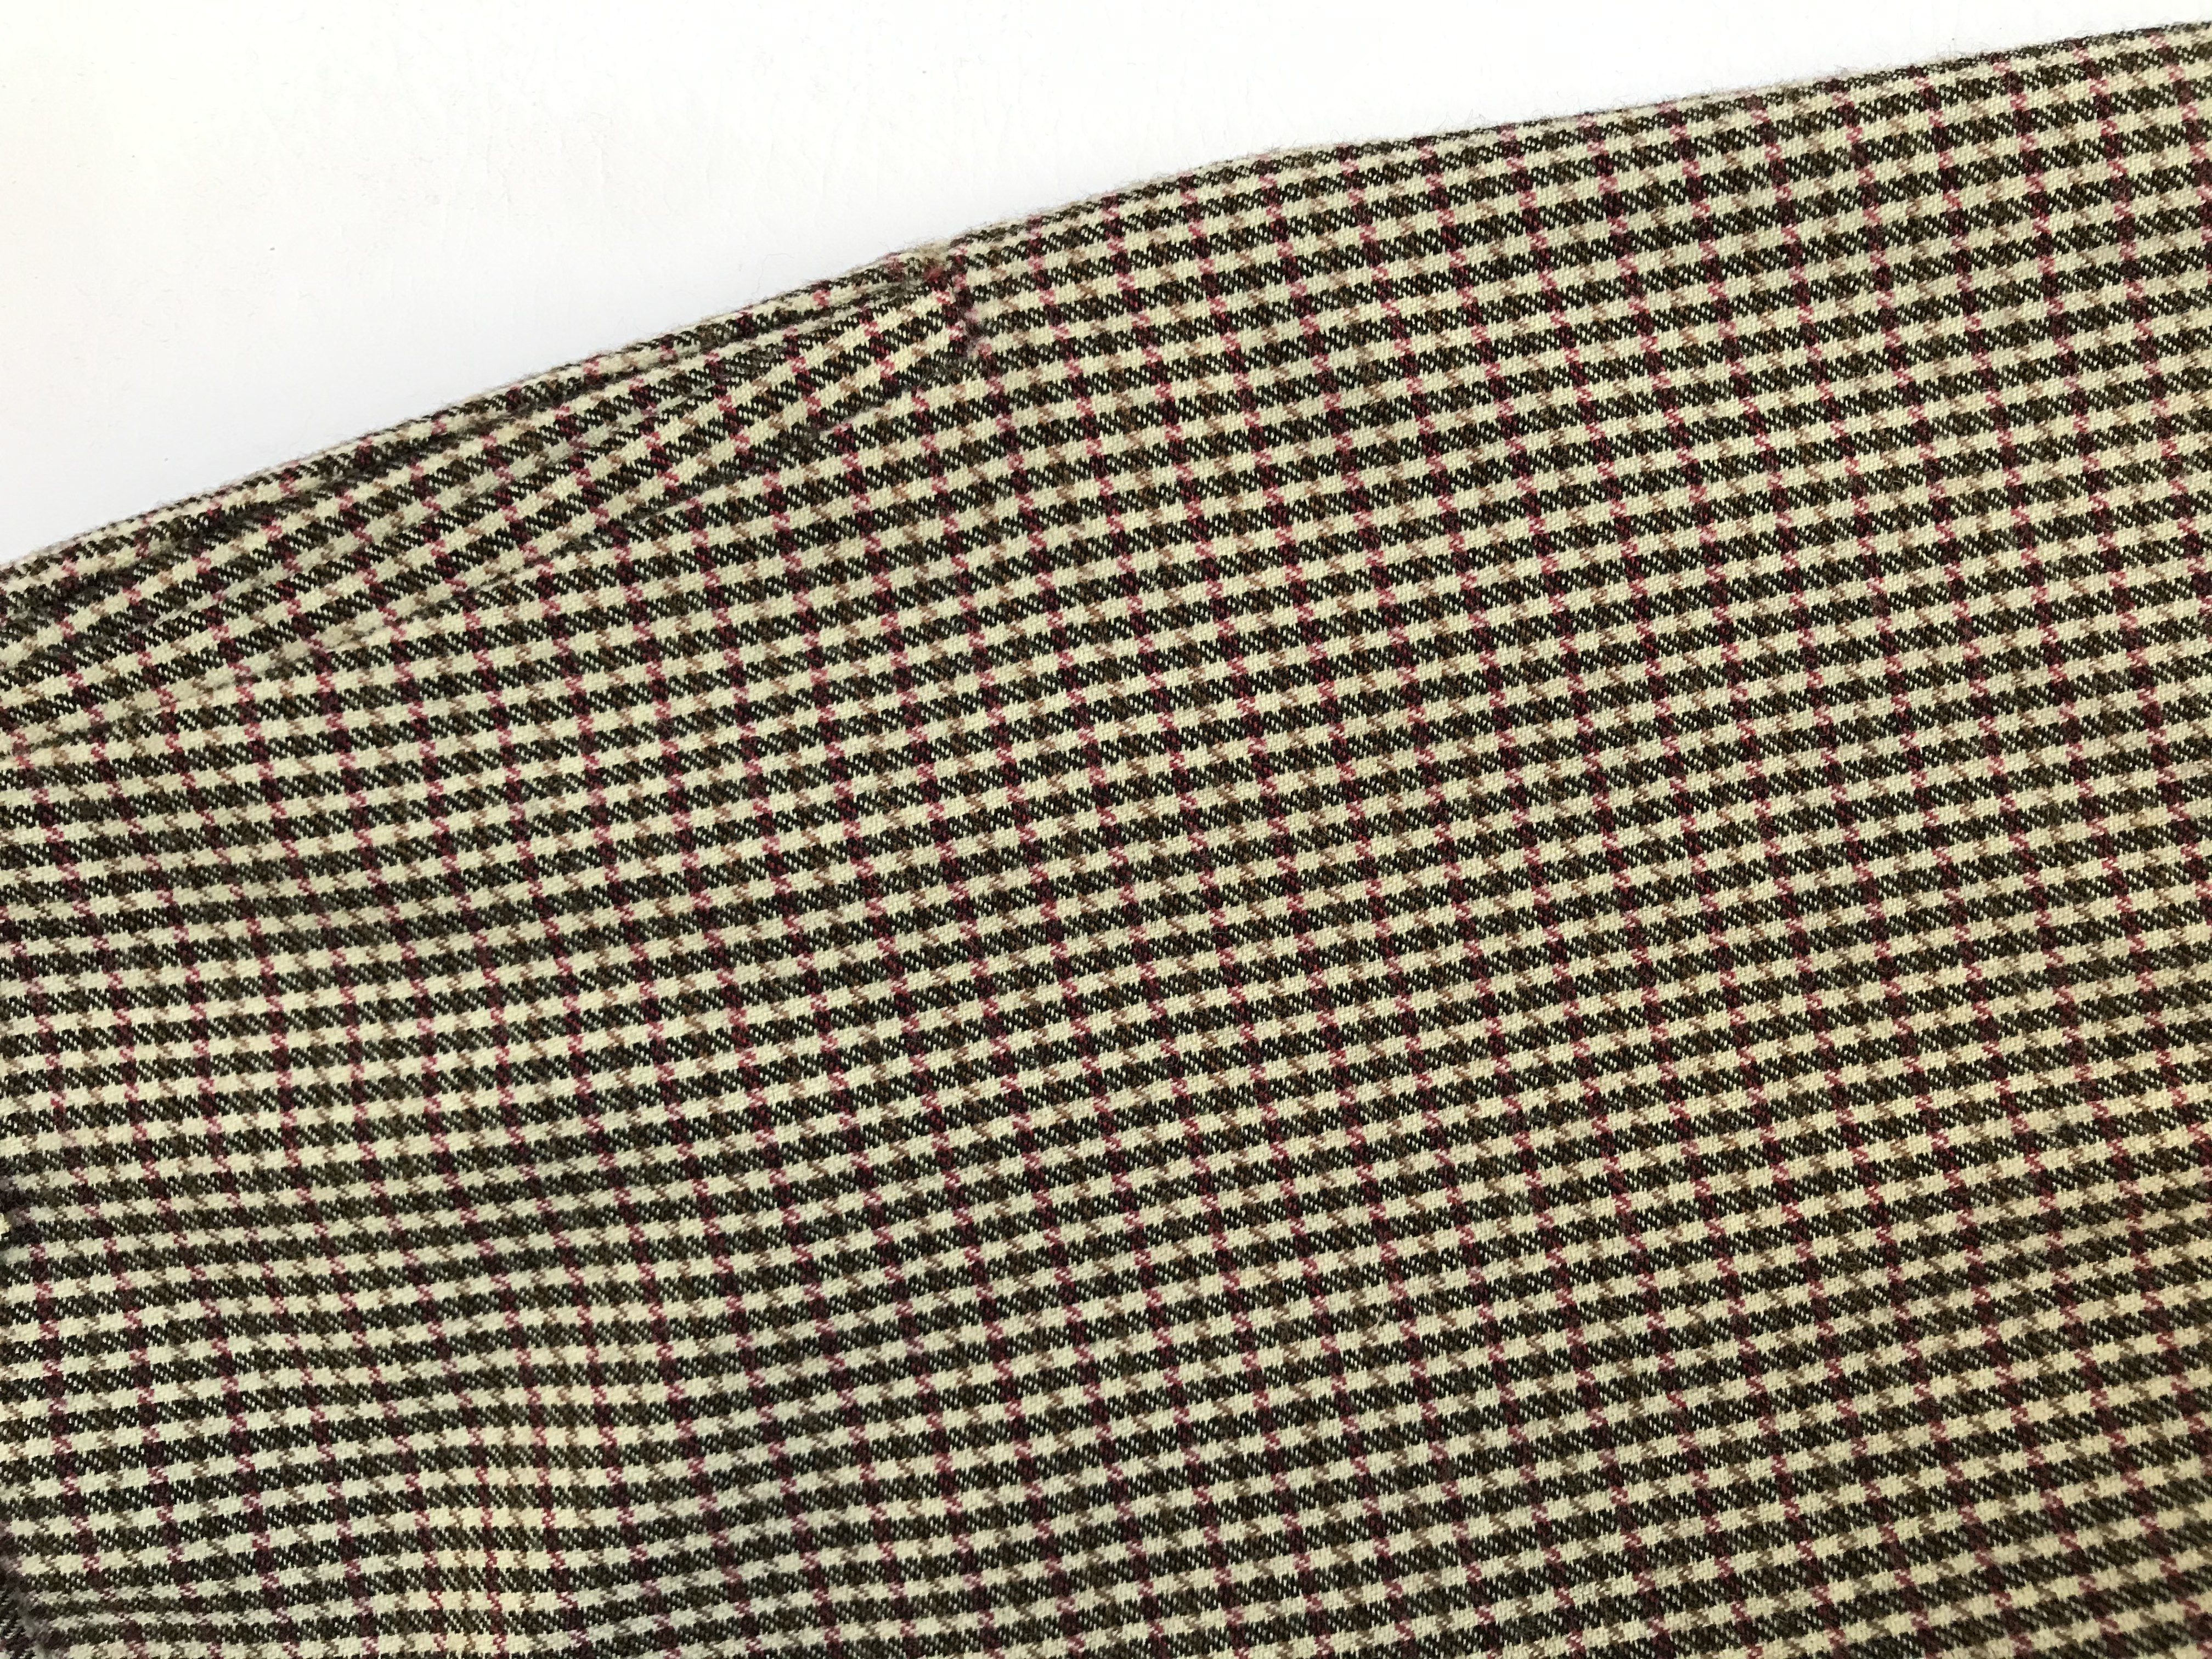 Pantalón Benetton 100% lana a cuadritos amarillos, fucsia y negros, corte recto, bolsillos laterales. ¡Lindo! Precio original S/ 300